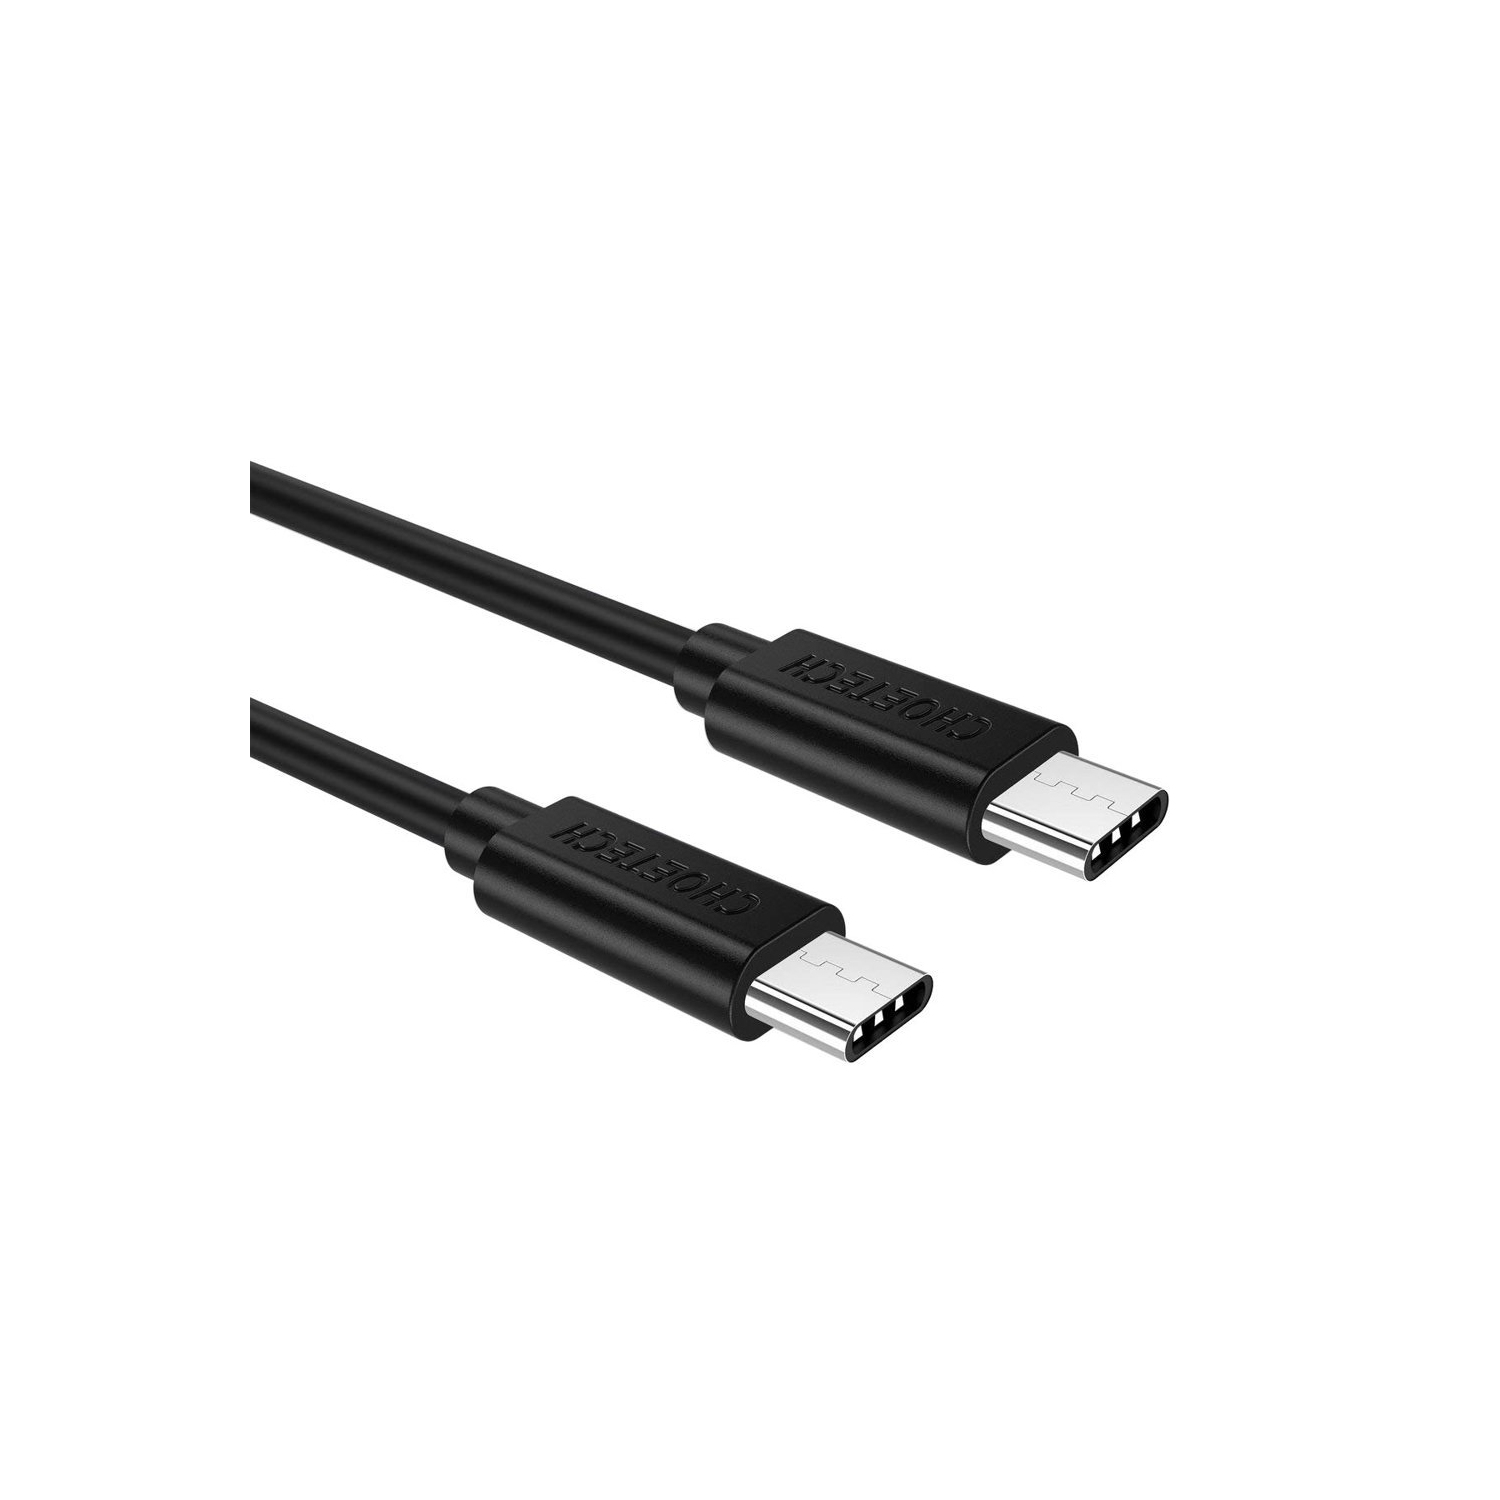 Choetech USB-C to USB-C Cable 3m (CC0004) - Brand New